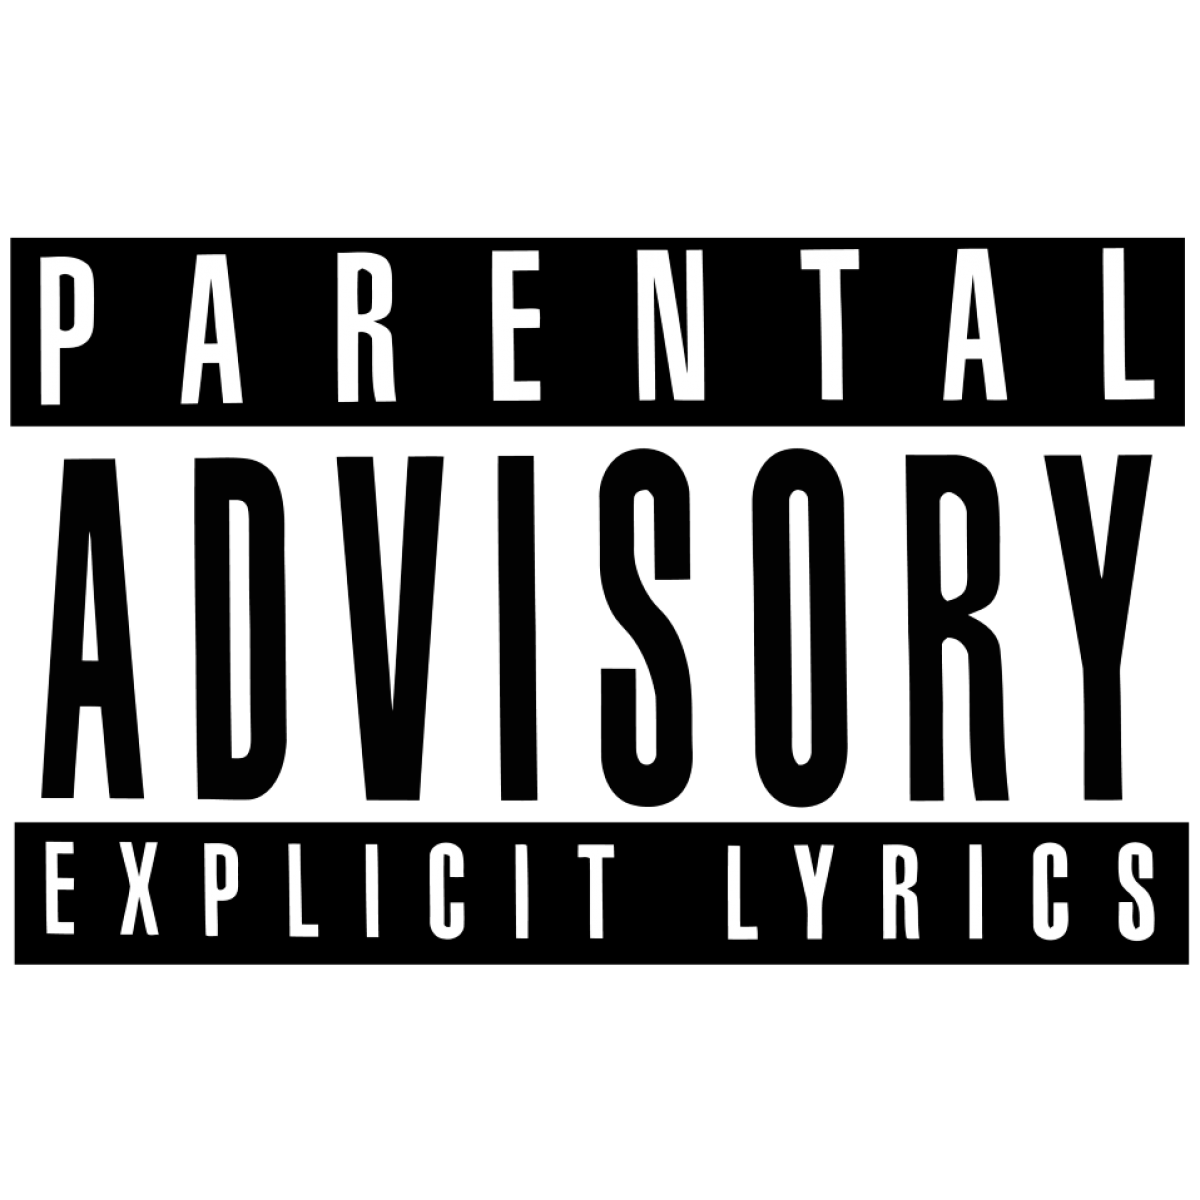 Parent Advisory Sticker PNG Image